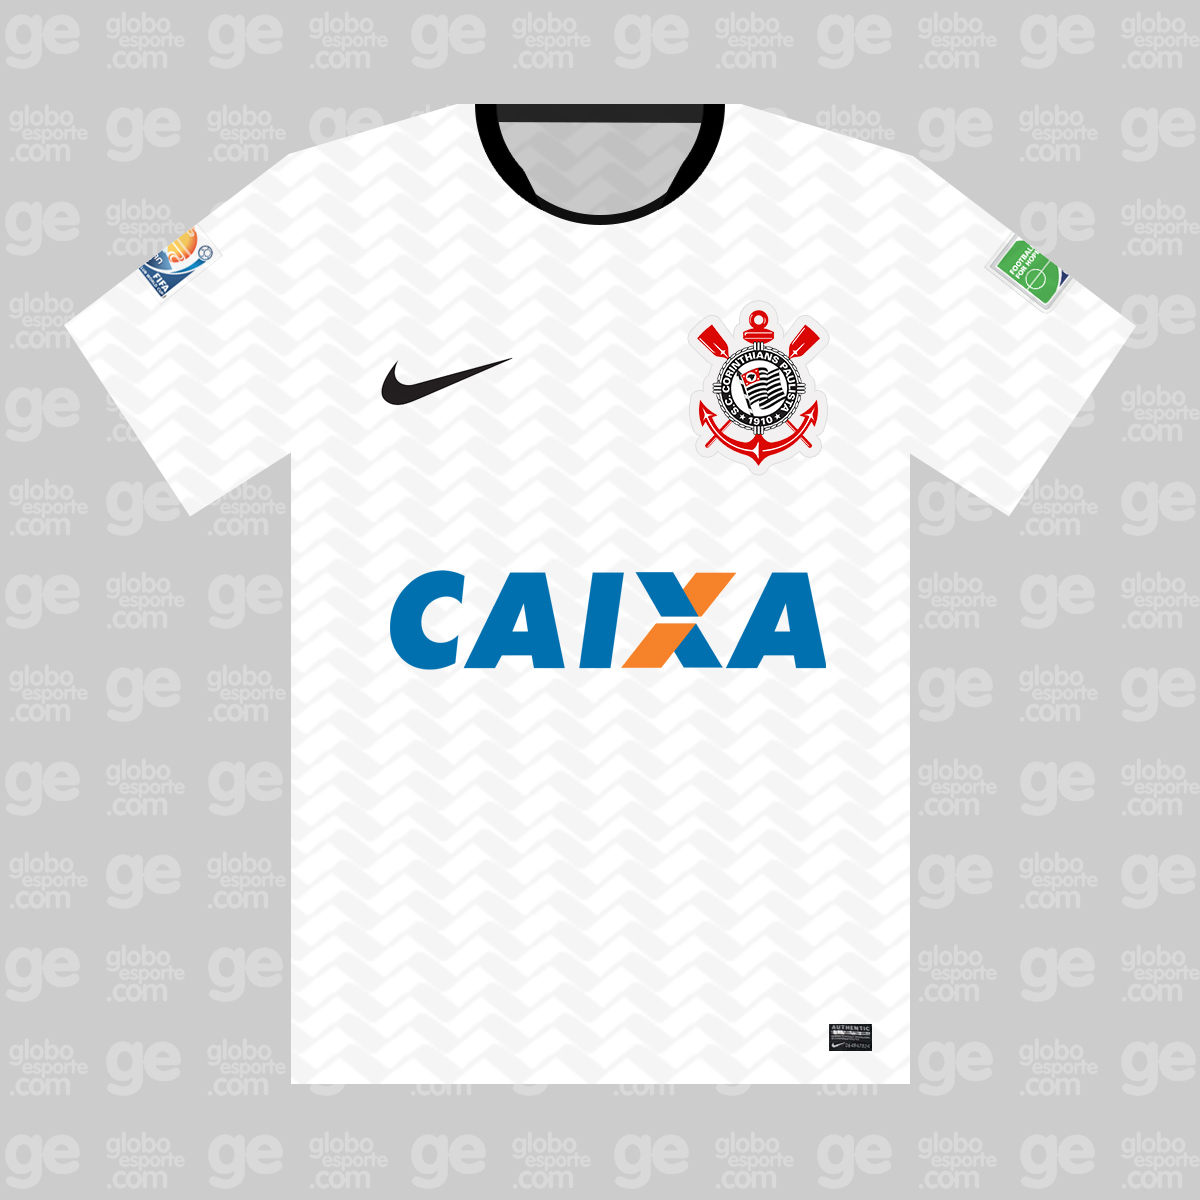 Camisapops Flamengo, ge.globo